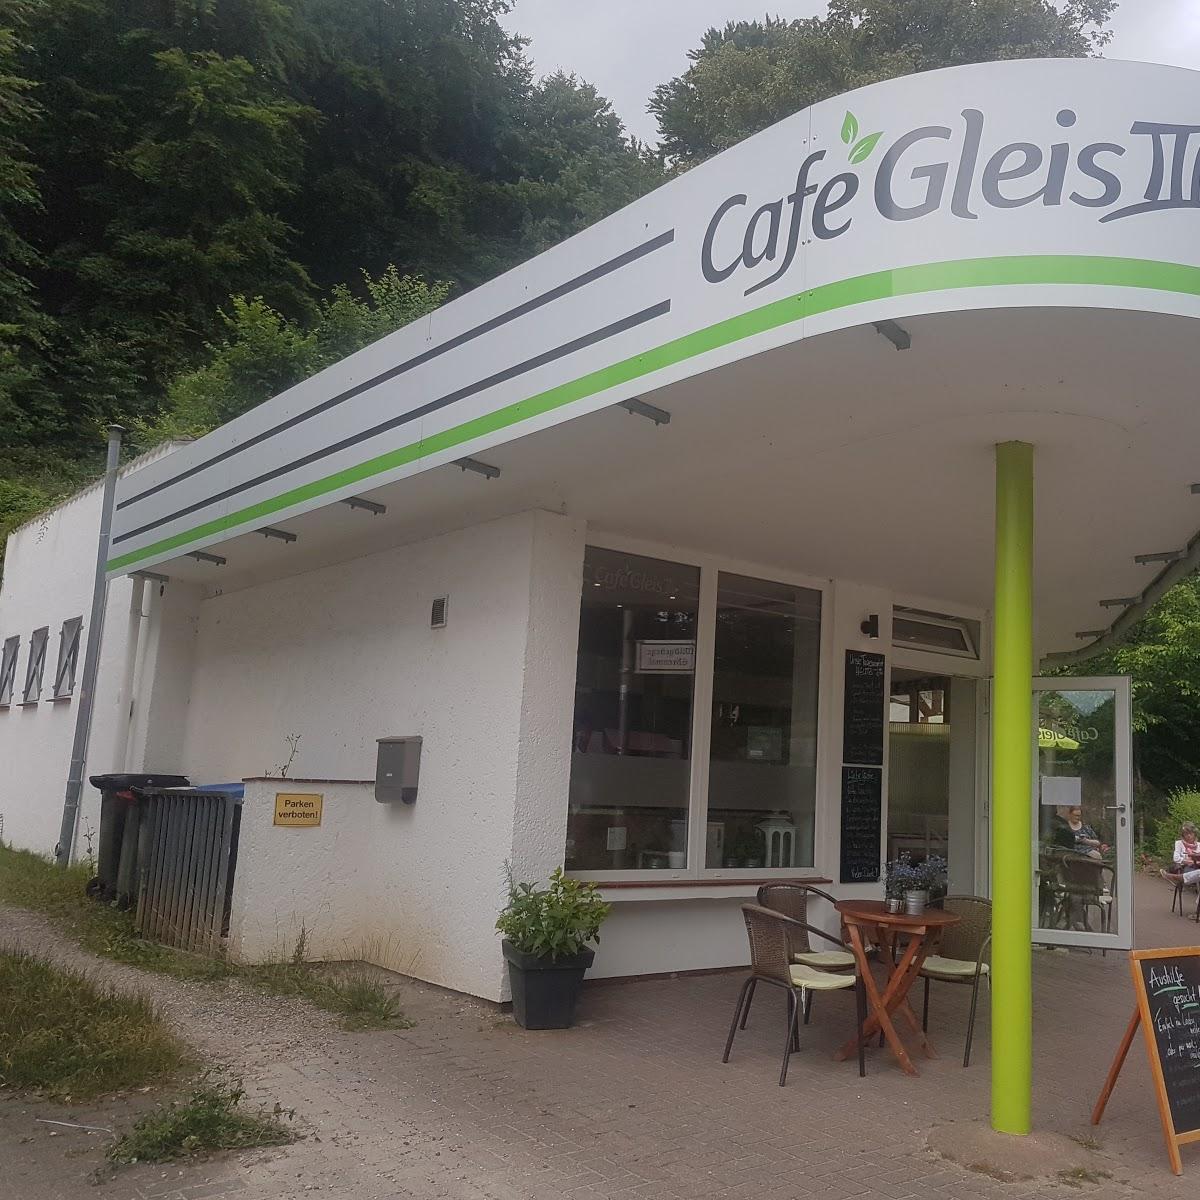 Restaurant "Cafe Gleis III" in Malente